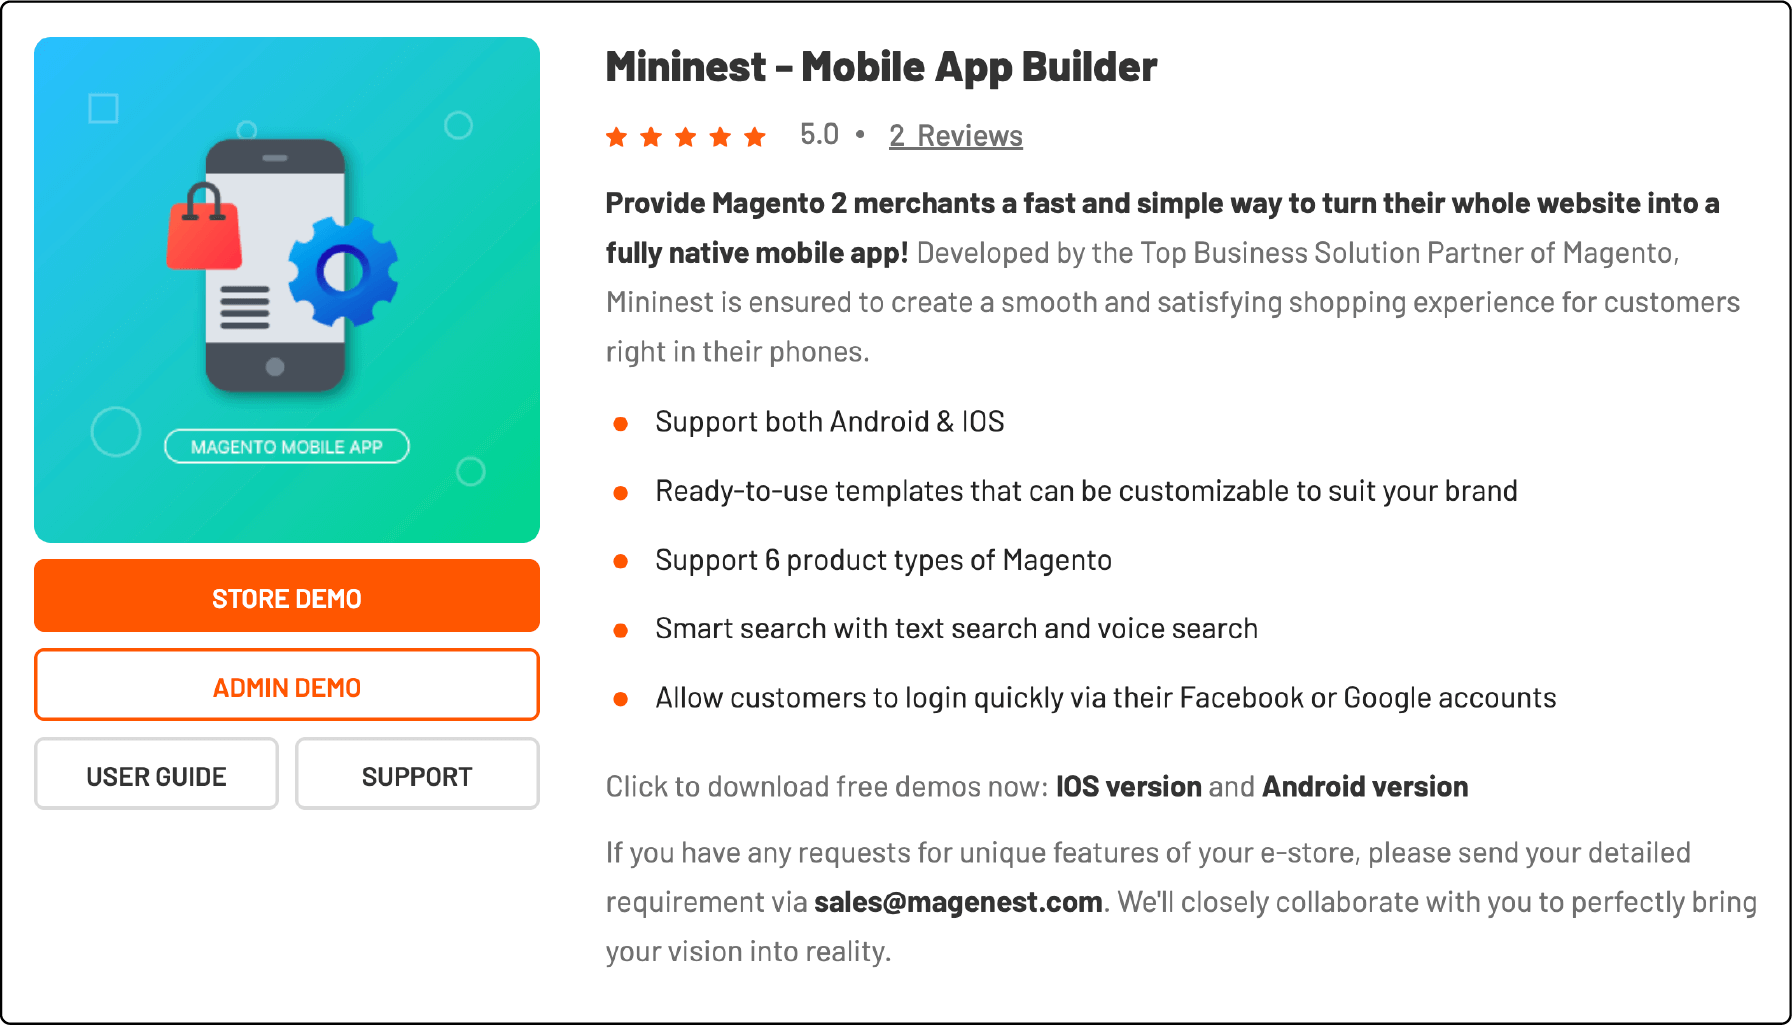 Mininest Mobile App Builder's sleek design by Magenest